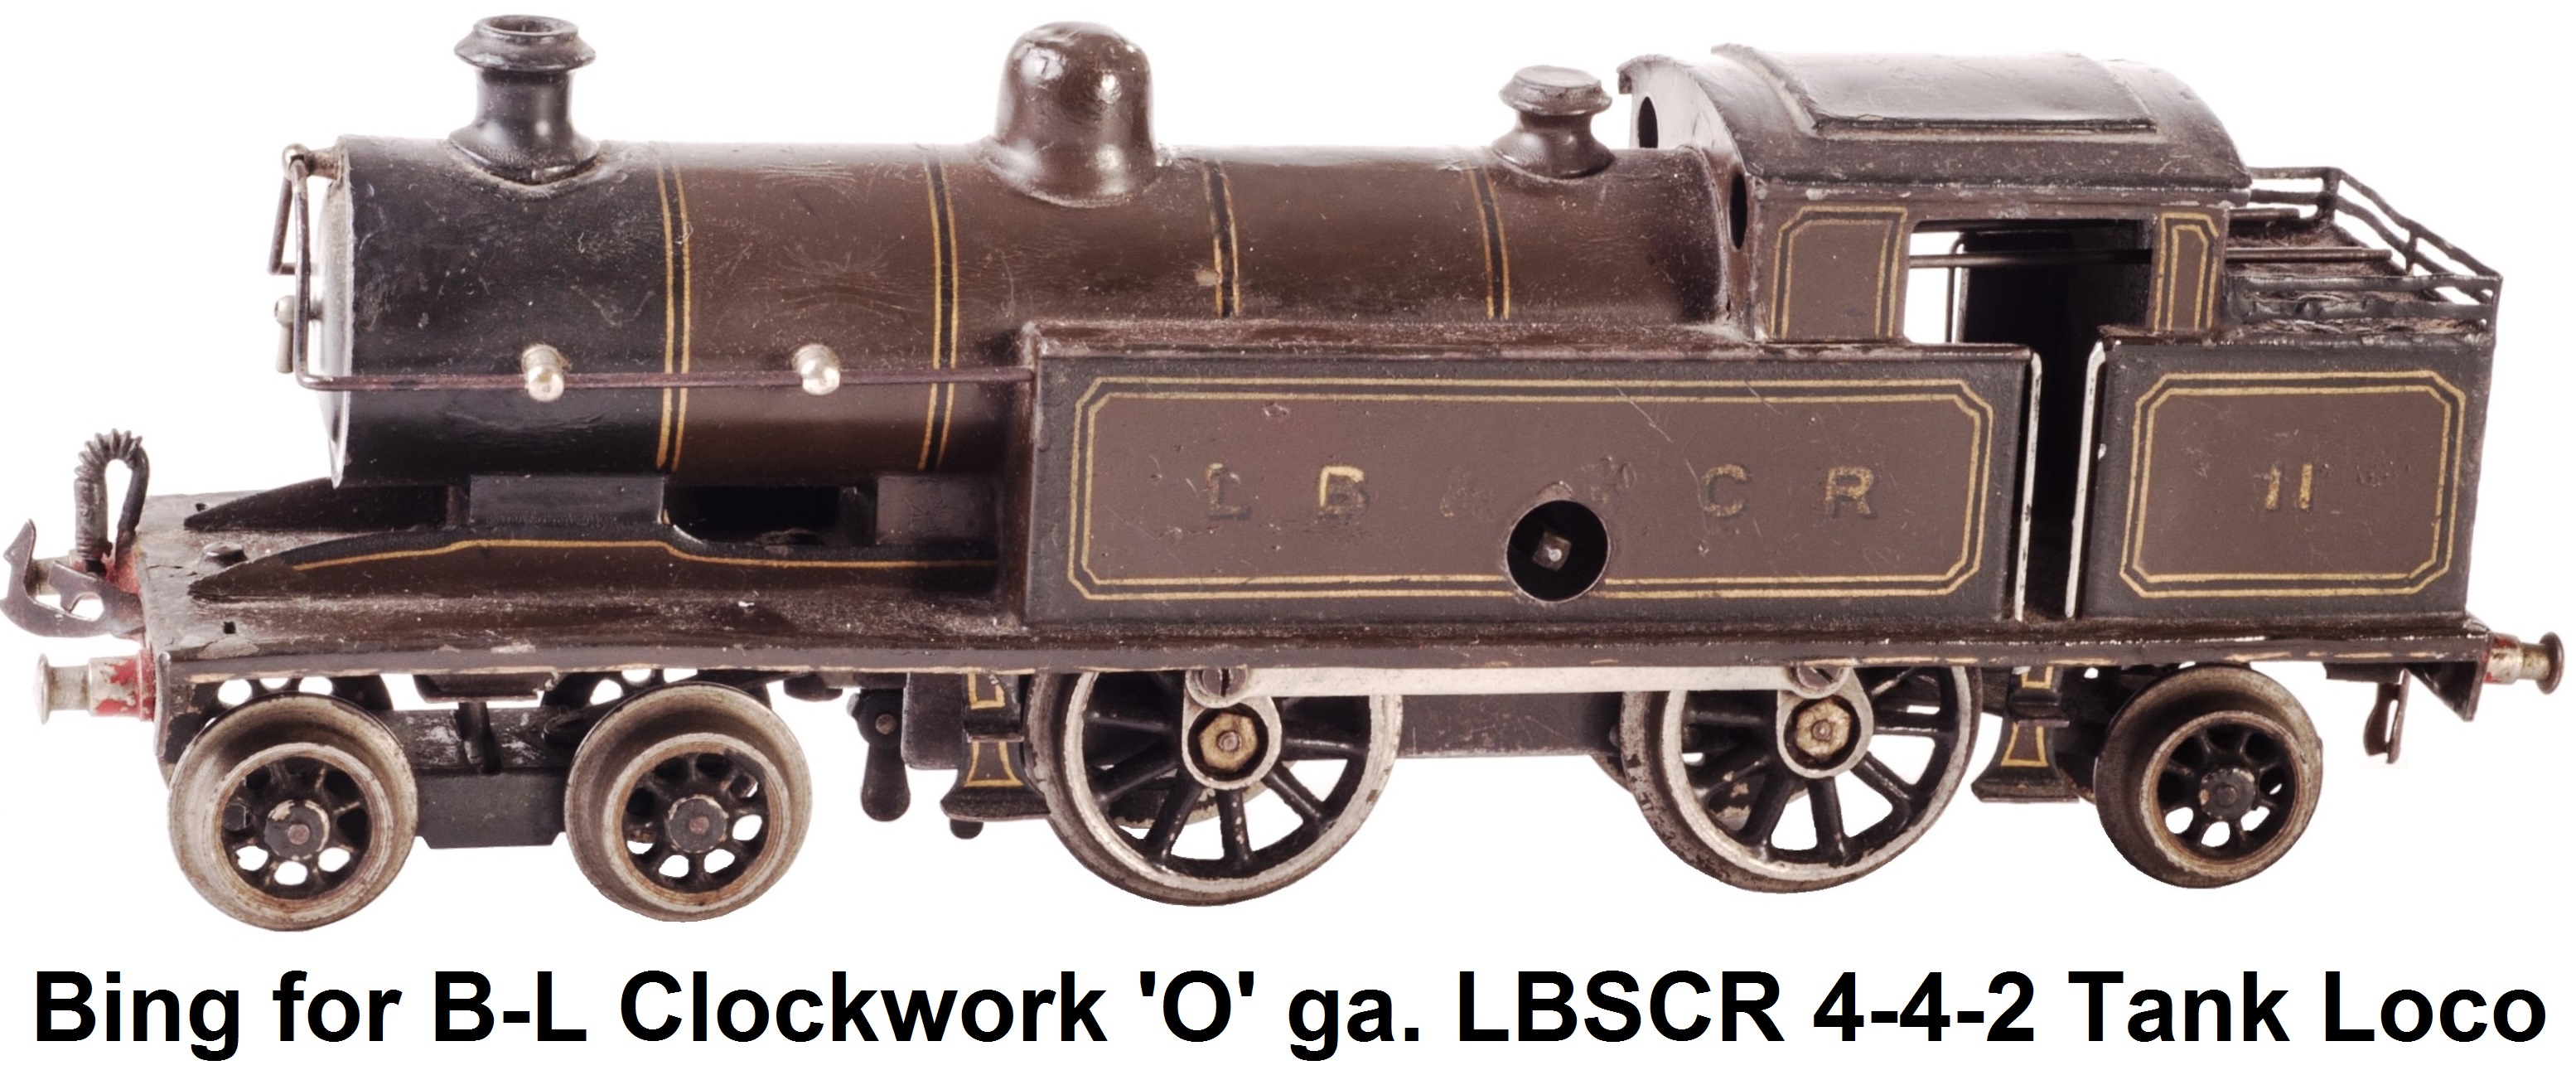 Bing for Bassett-Lowke Clockwork 'O' gauge London, Brighton and South Coast Railway 4-4-2 I-3 class Tank locomotive, in original D. E. Marsh’s Umber livery as LBSCR #11 circa 1915